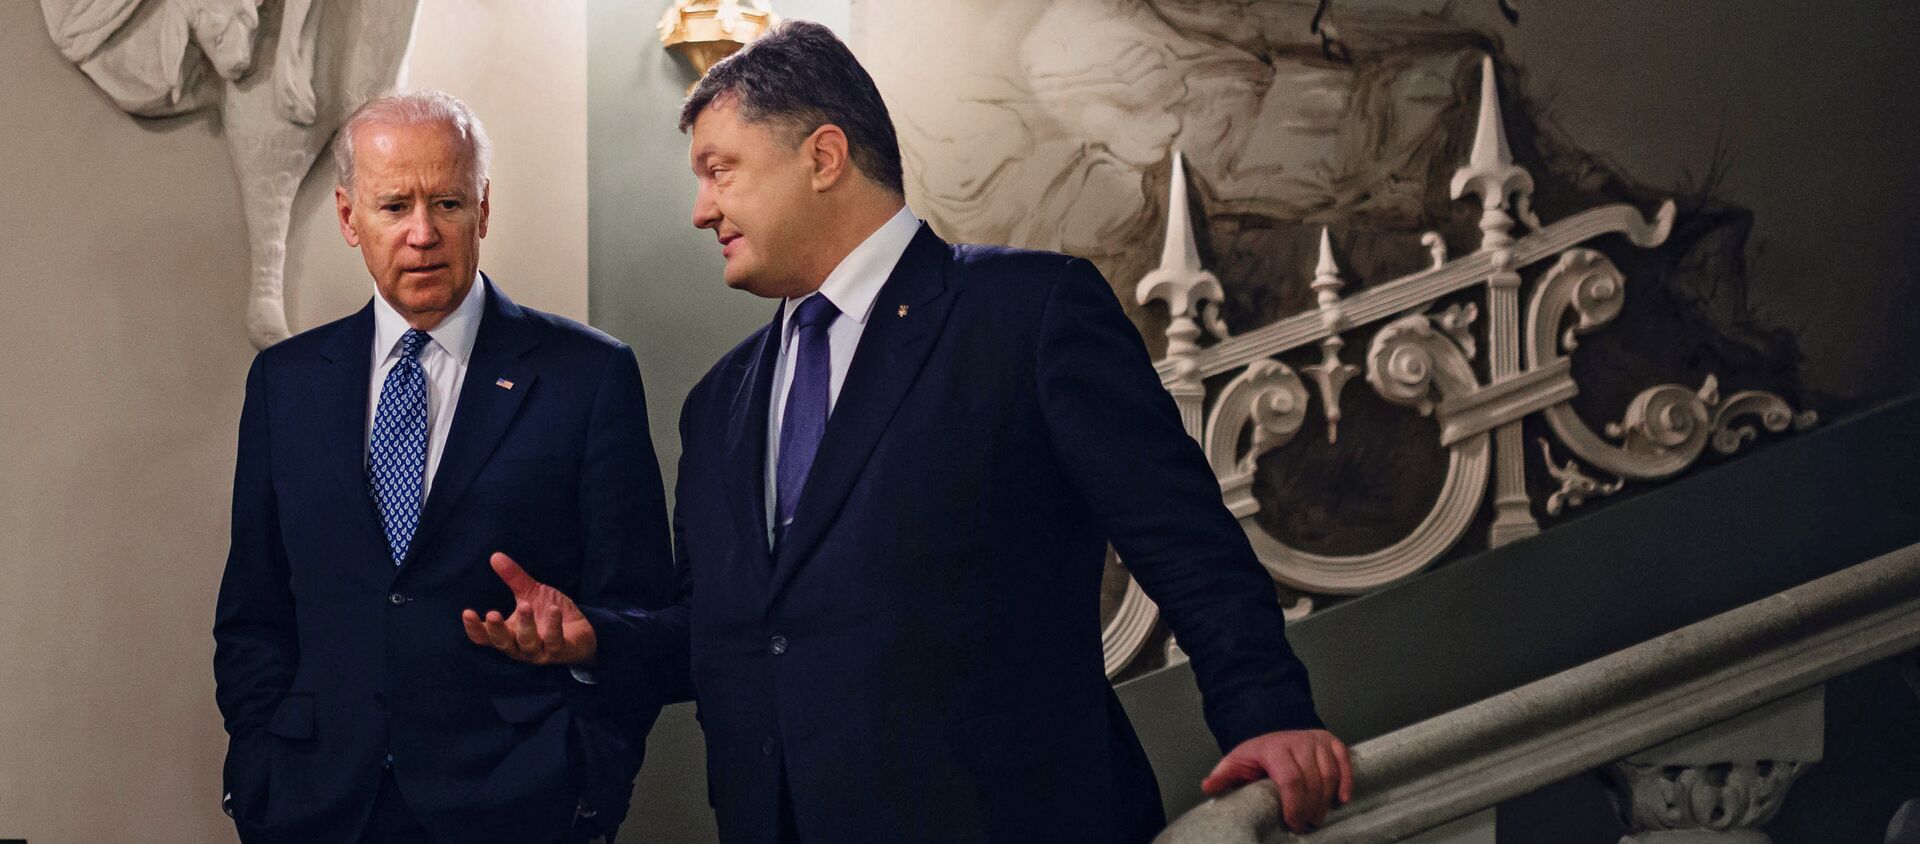 Ukrainian President Petro Poroshenko meets with Vice President of the United States Joe Biden, August 2016. - Sputnik International, 1920, 19.05.2020